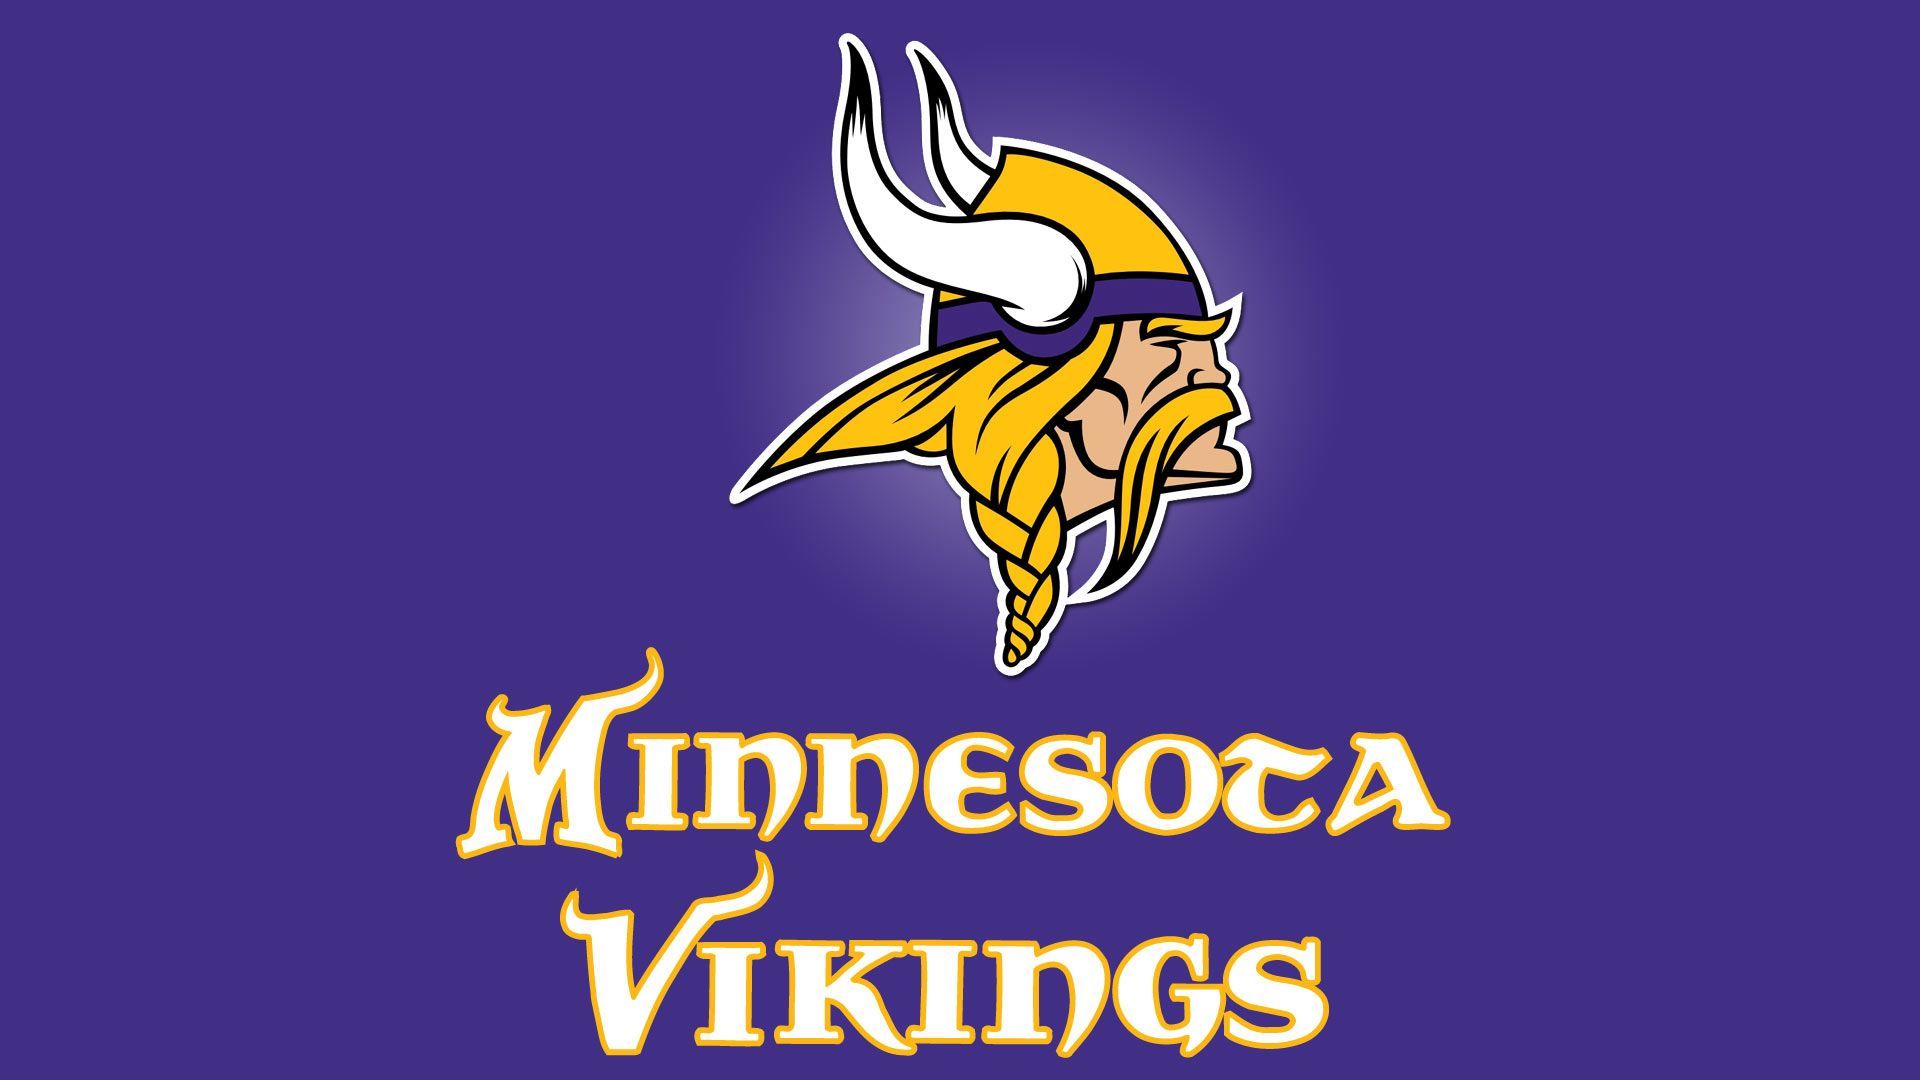 NFL Team Logo Minnesota Vikings wallpaper HD. Free desktop